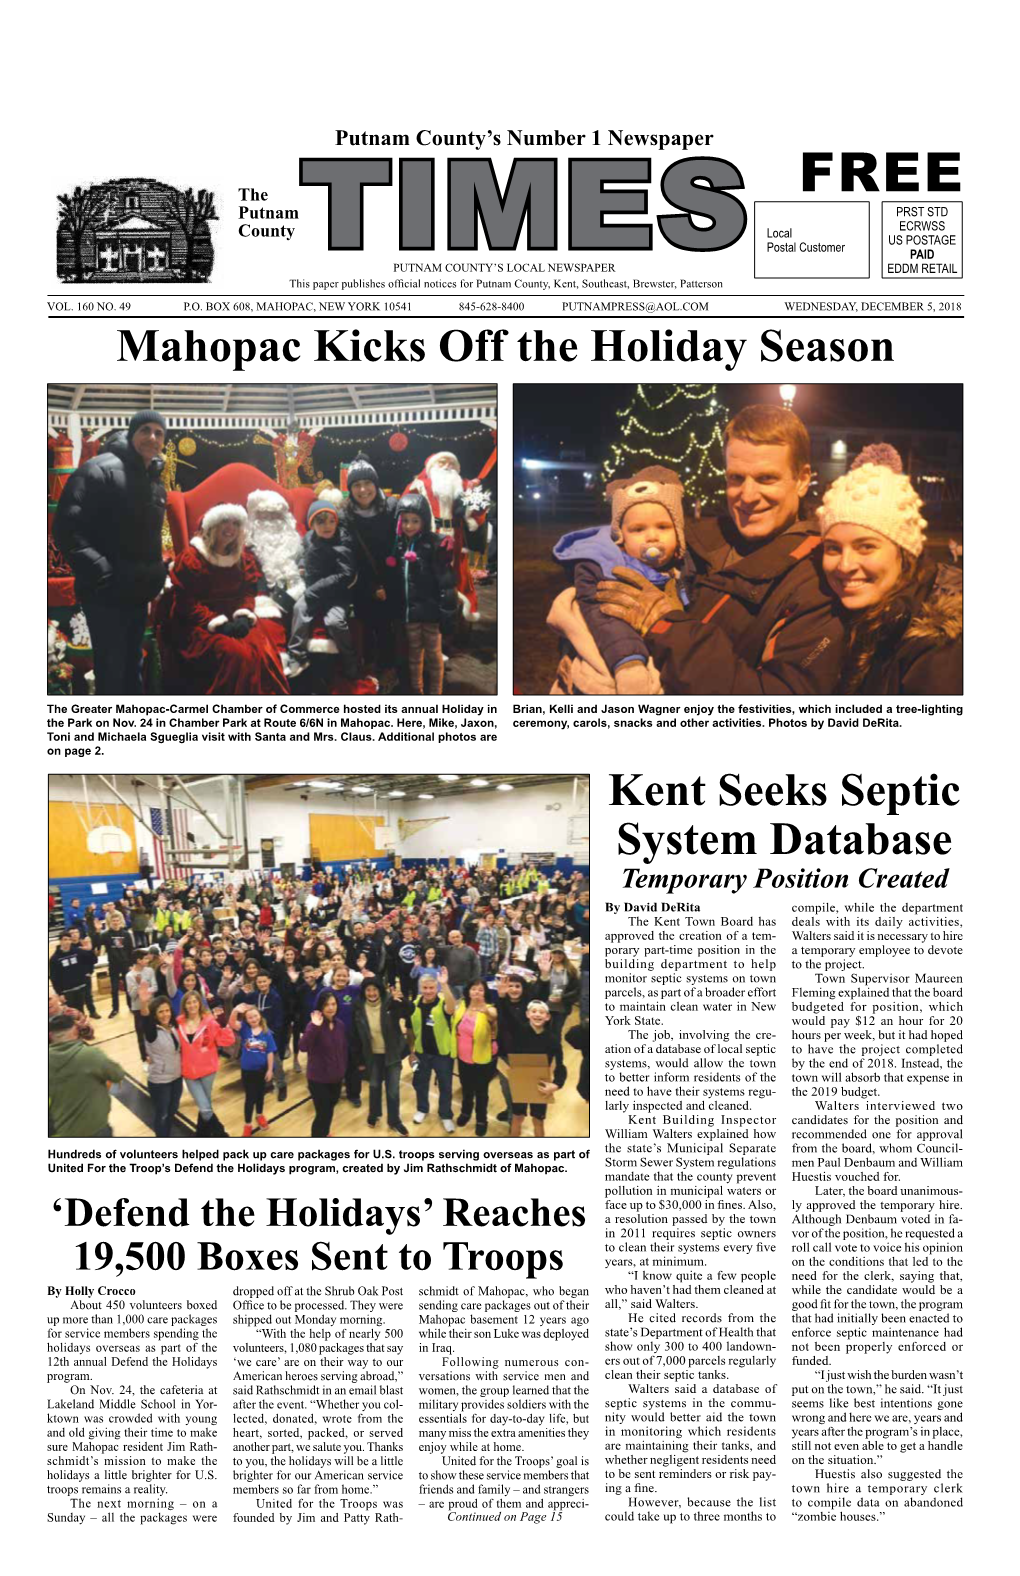 Kent Seeks Septic System Database Mahopac Kicks Off the Holiday Season